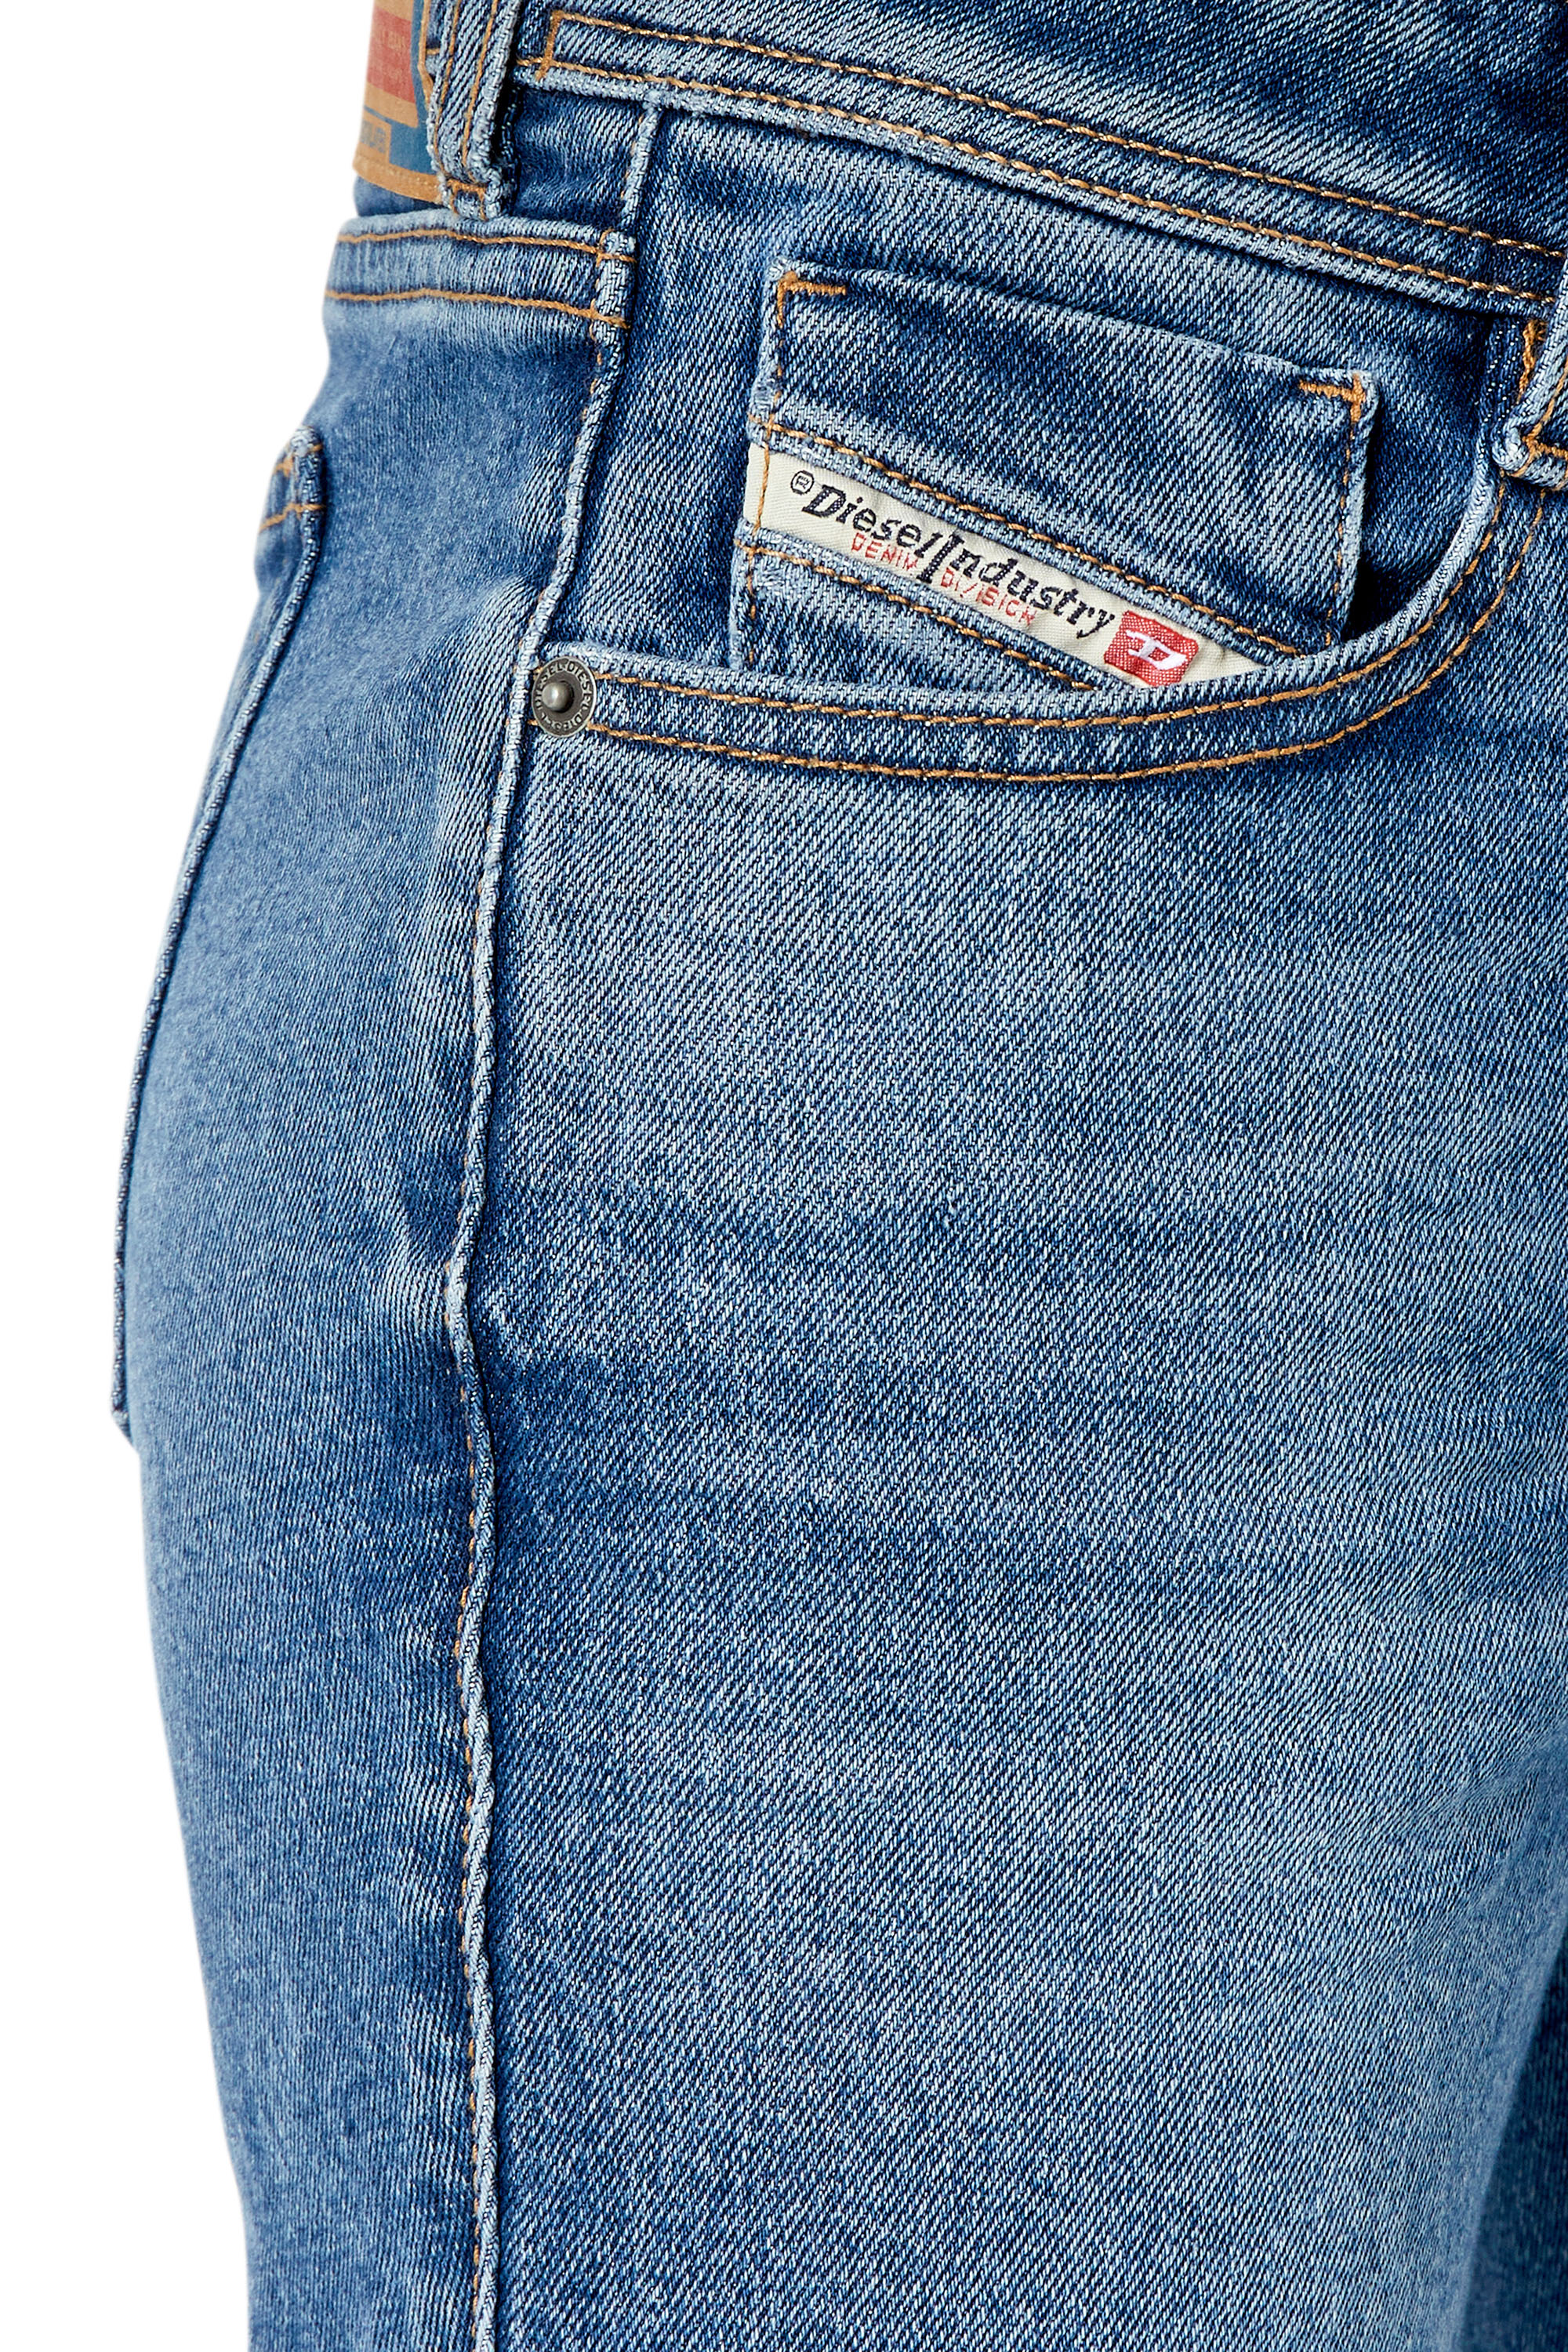 Women's Jeans: Skinny, Slim, Palazzo | Shop on Diesel.com